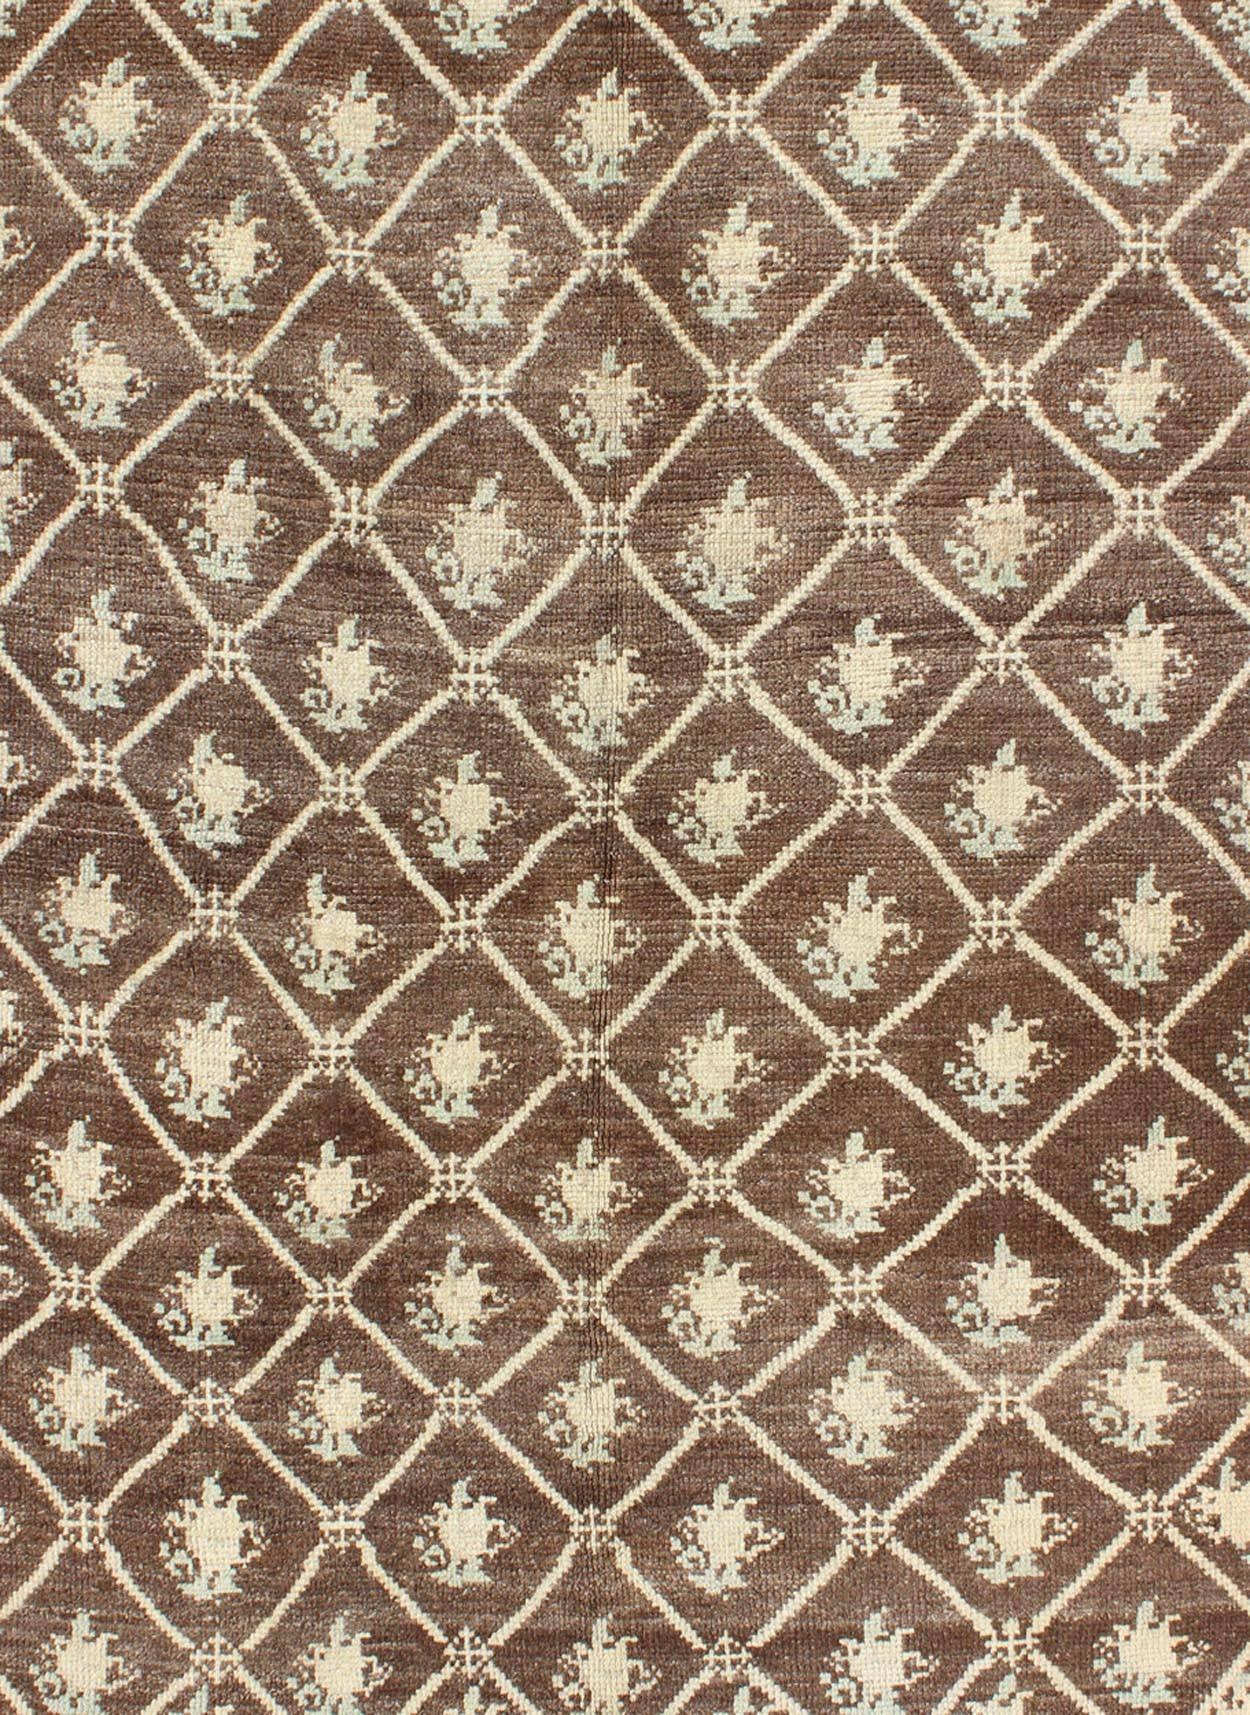 shades of brown carpet